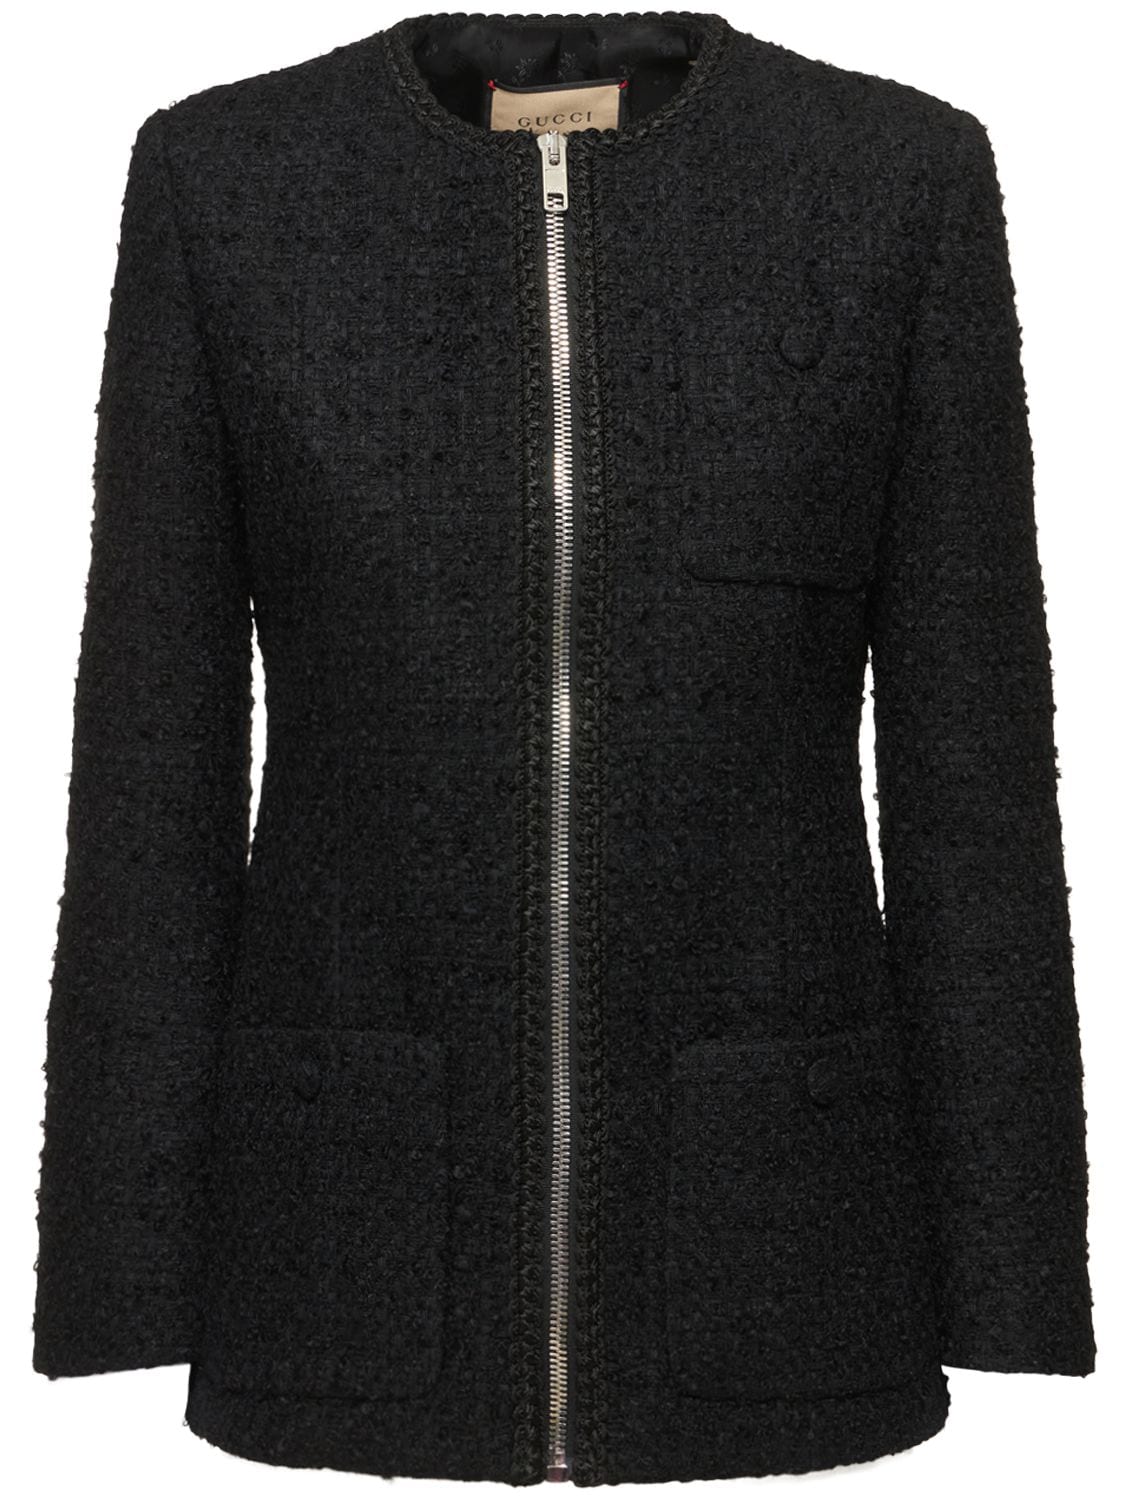 Image of Wool Blend Jacket